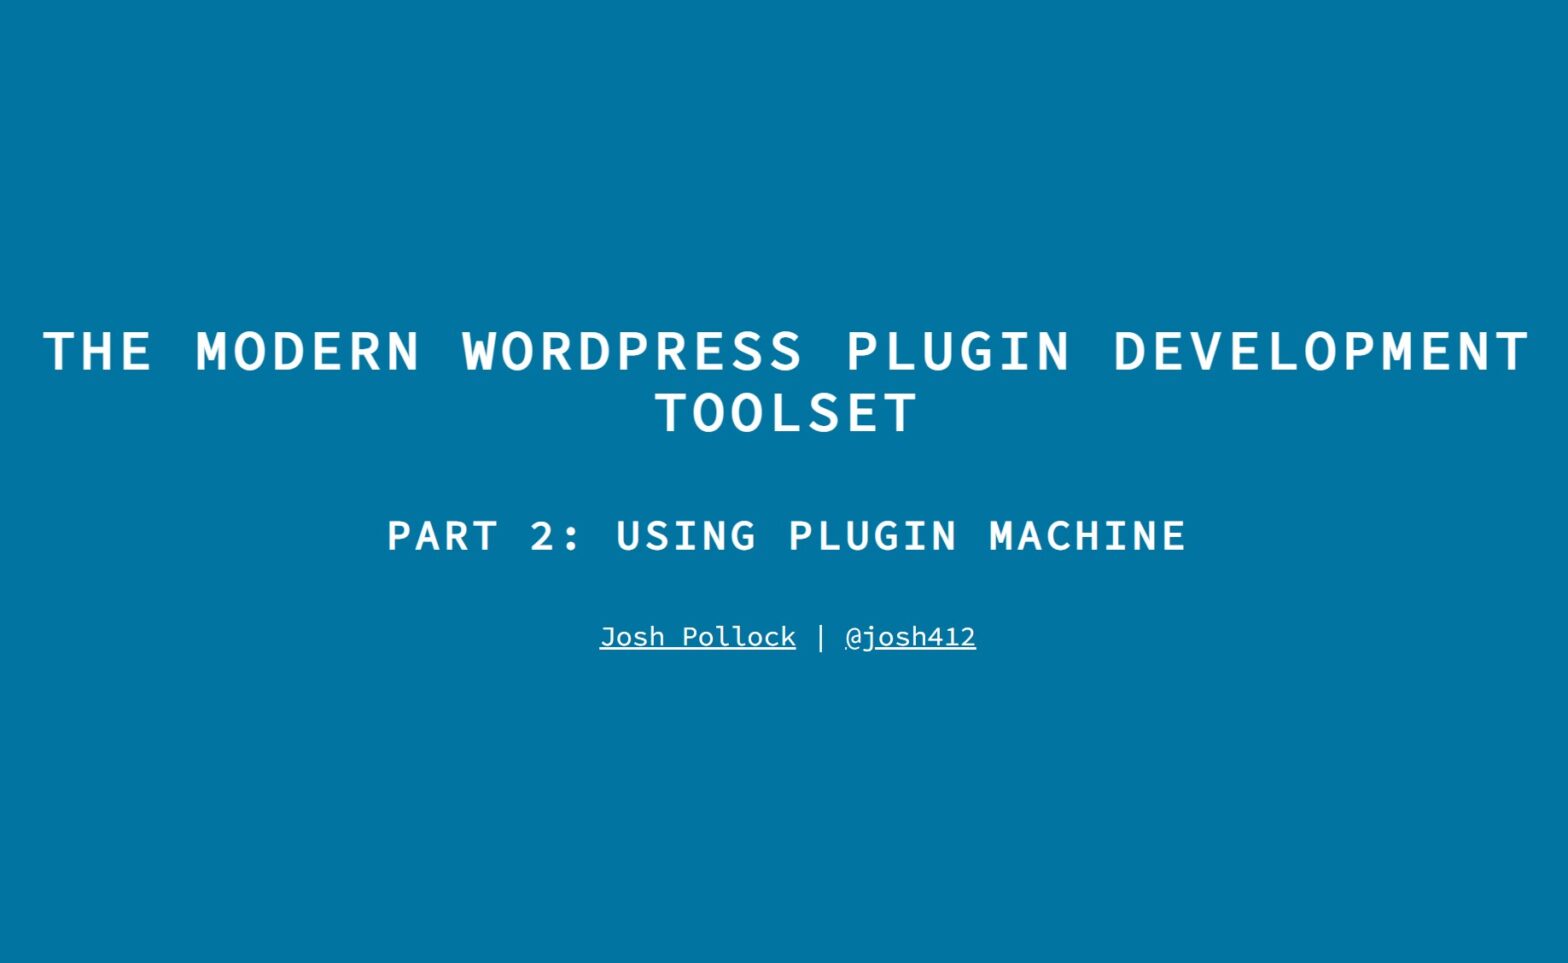 Title slide for "The Modern Plugin Development Toolset Part 2" talk